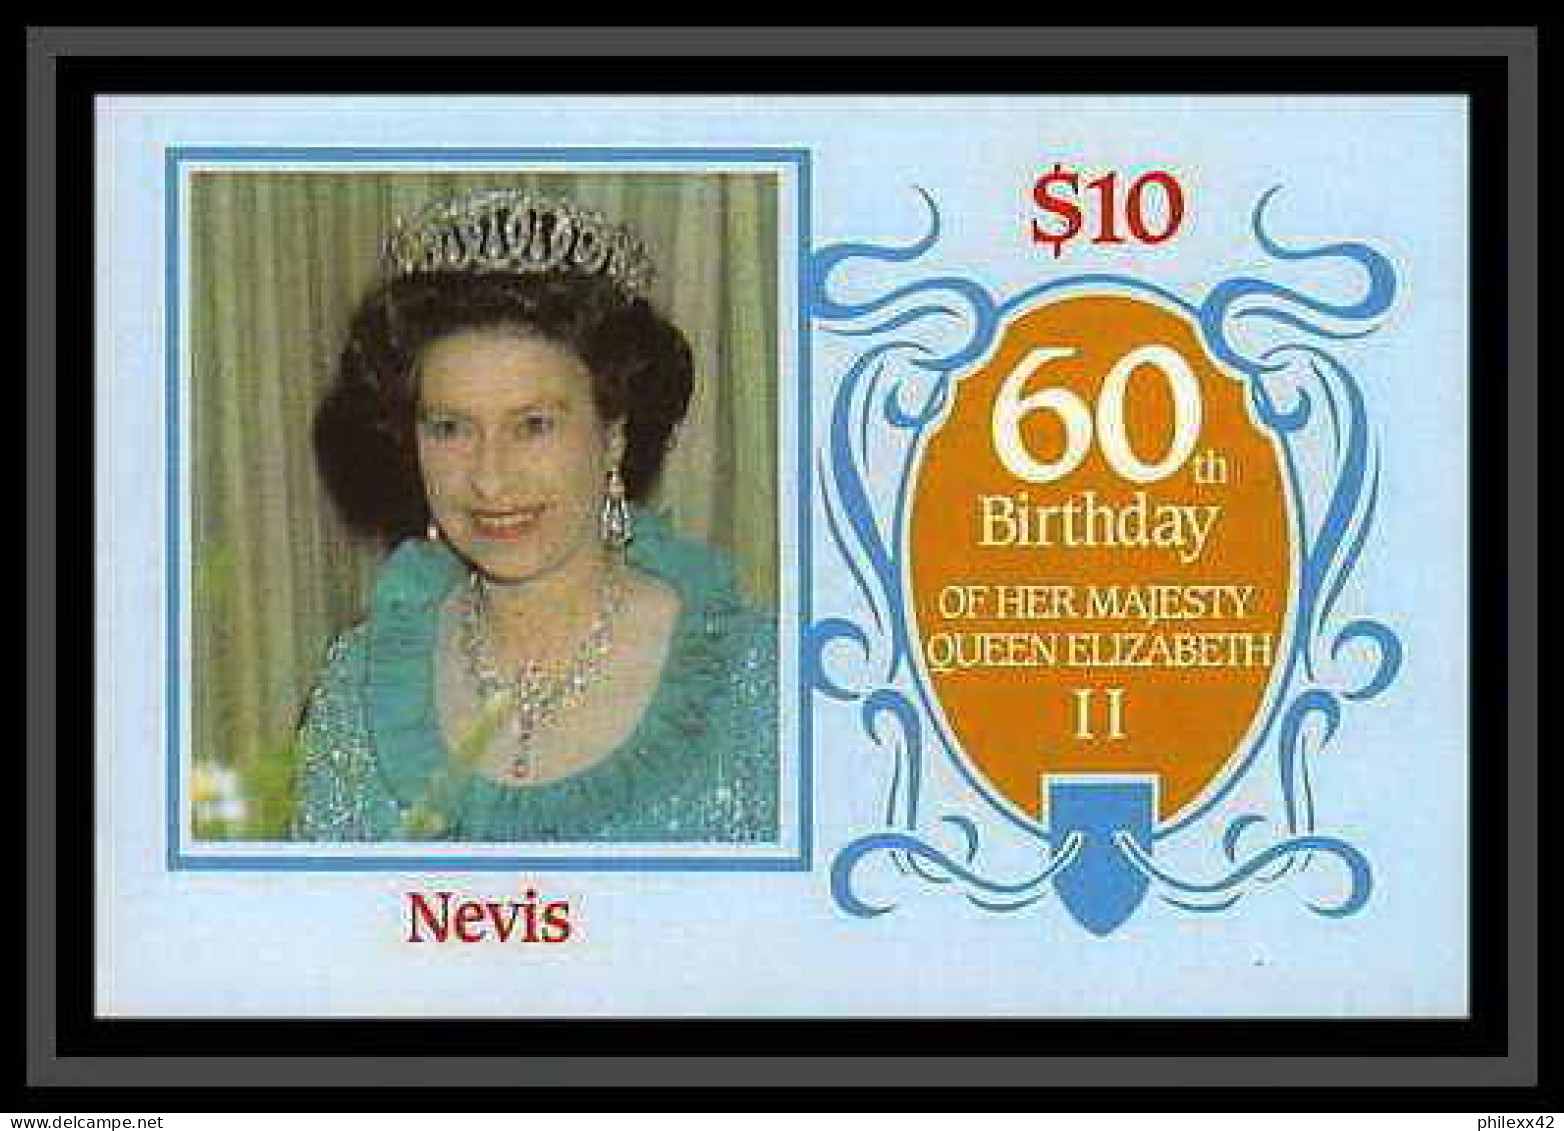 923c British Empire MNH ** 1986 Queen mother Elizabeth bloc + non dentelé Imperf very rar set perfect condition DISCOUNT